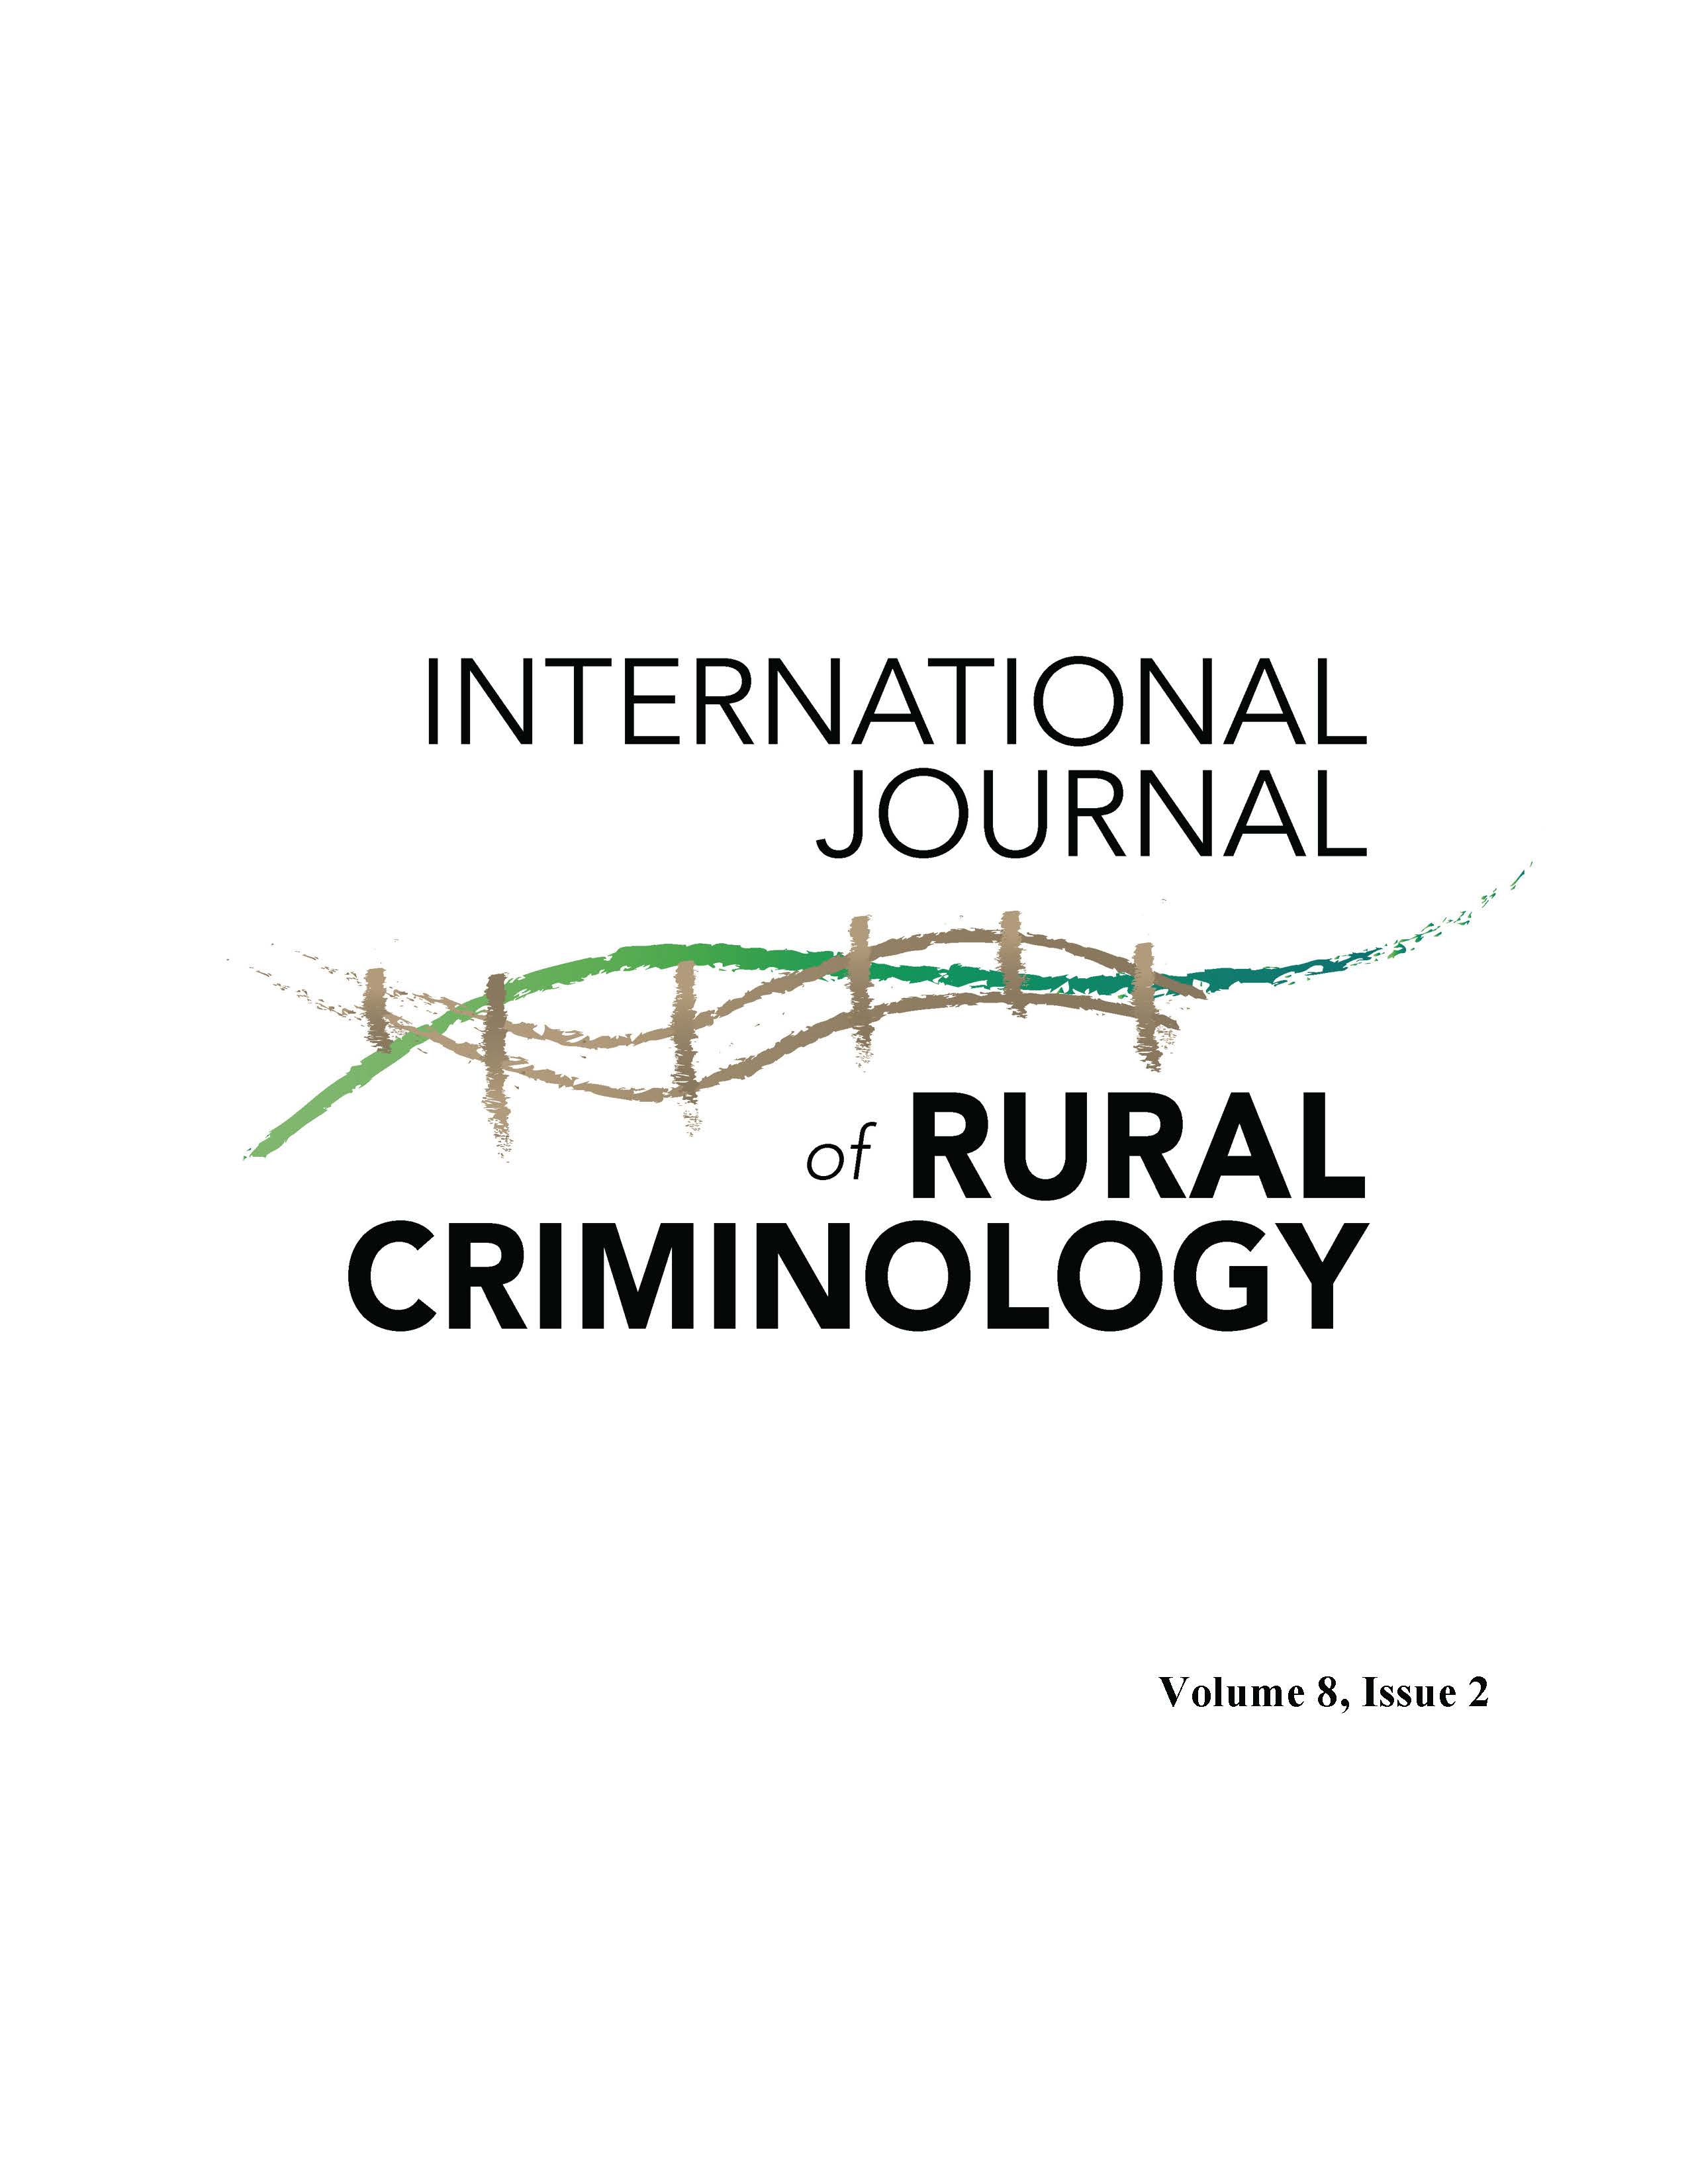 Cover for Vol. 8, No. 2 of International Journal of Rural Criminology.